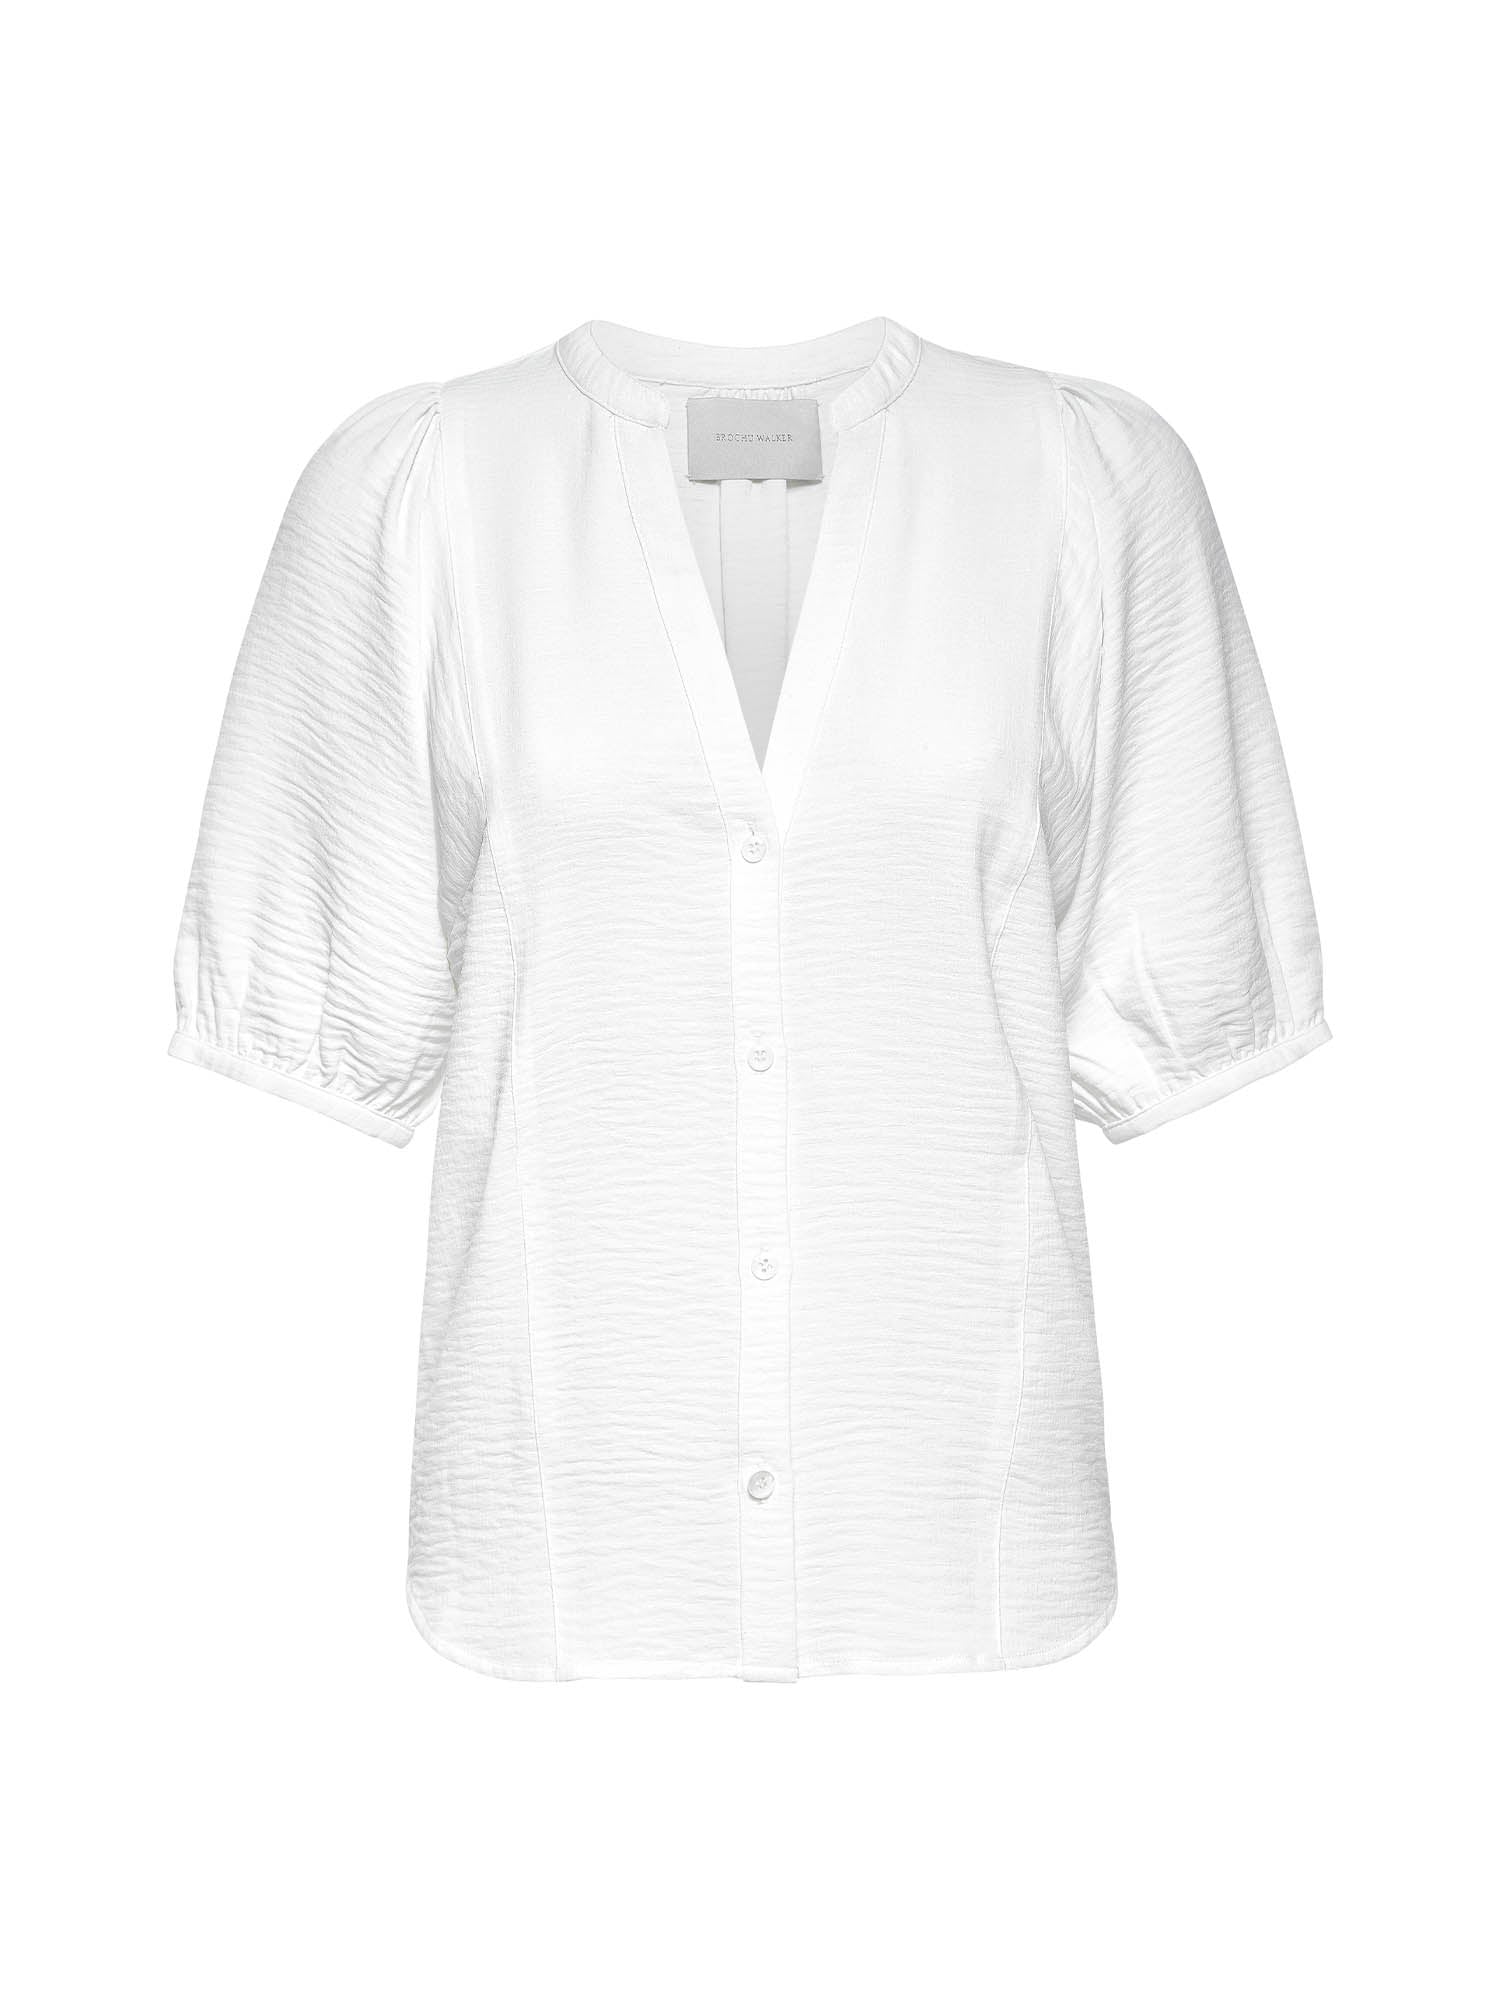 East v-neck white blouse flat view